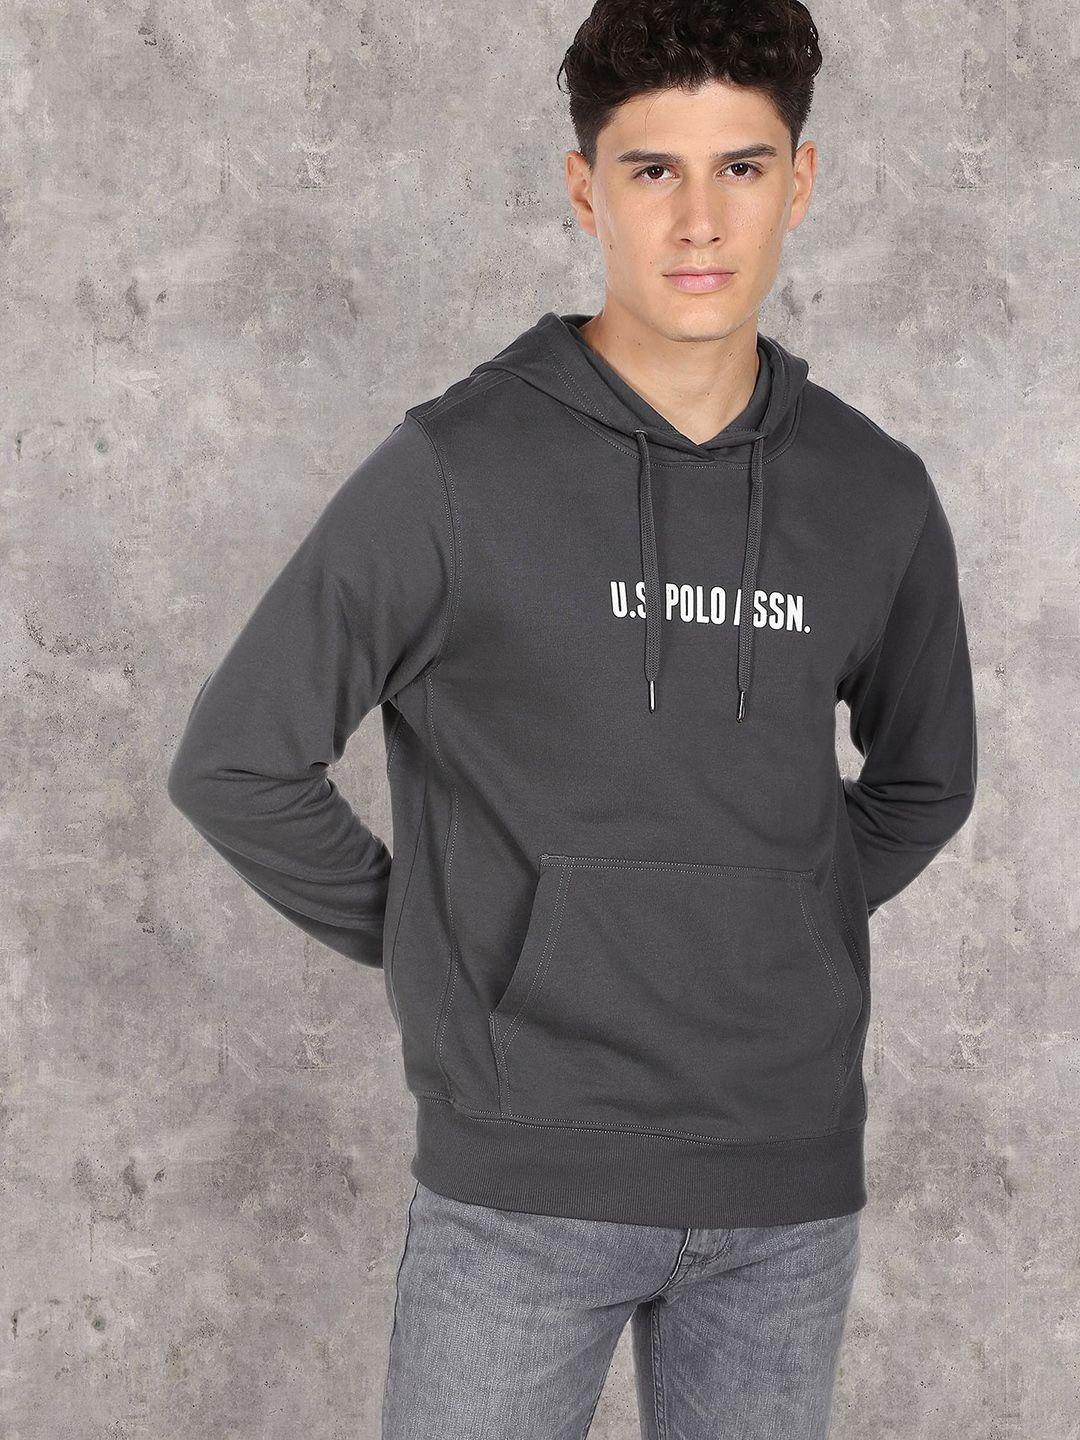 u.s. polo assn. denim co. men black printed hooded pure cotton sweatshirt